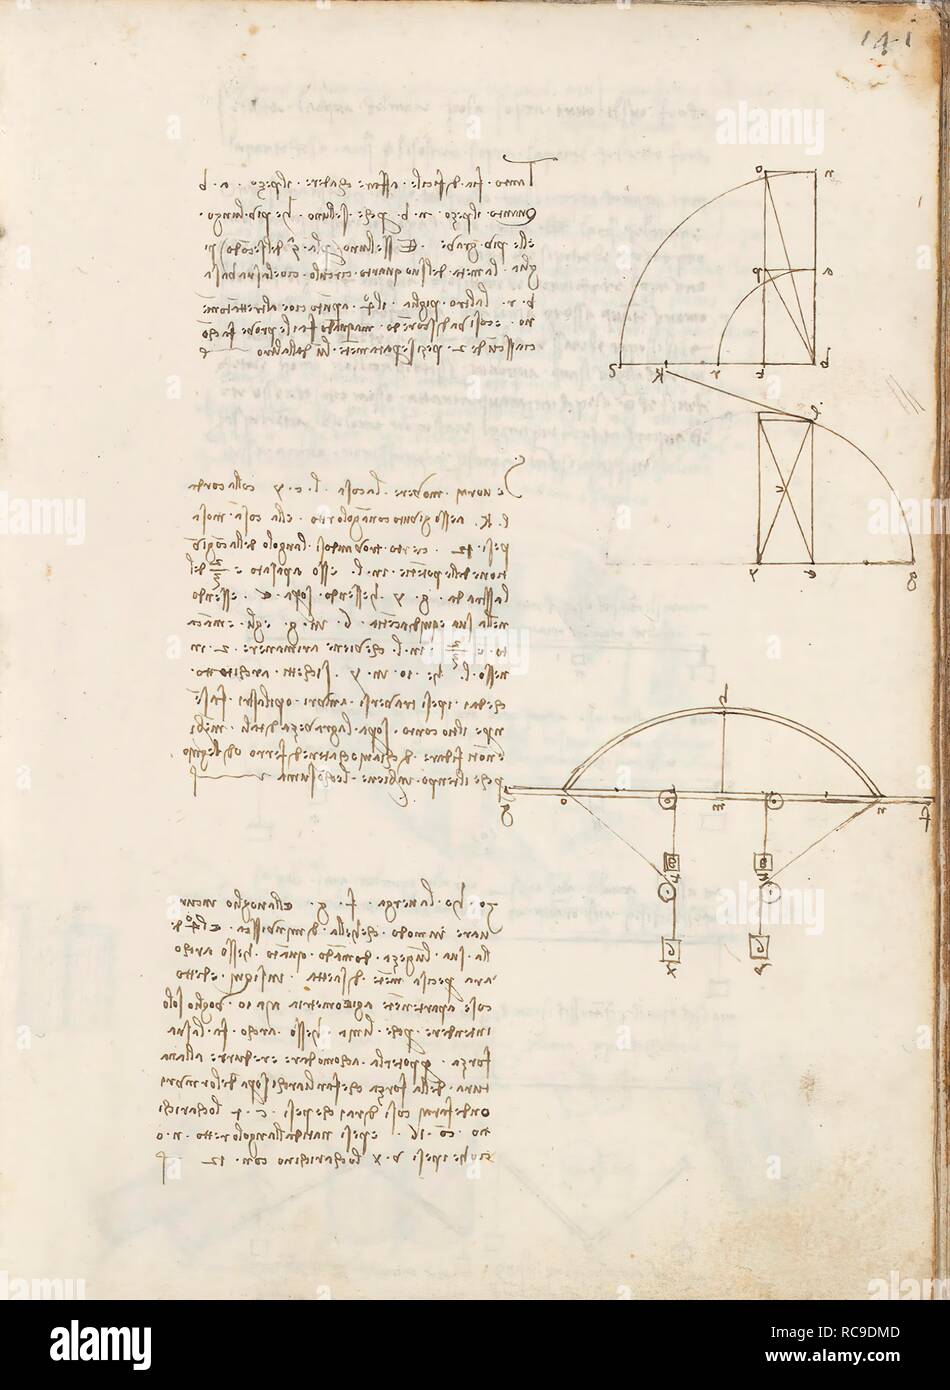 Folio f 141r. Codex Madrid I (Ms. 8937) 'Treaty of statics and mechanics', 192 folios with 384 pages. Internal format: 215 x 145 mm. CIVIL ENGINEERING, CONSTRUCTION. MATHEMATICS. APPLIED MECHANICS (COMPONENTS). MENTION OF MATERIALS. PRINCIPLES OF MECHANICS, CINEMATICS, DYNAMICS. Museum: BIBLIOTECA NACIONAL DE ESPAÑA, MADRID. Author: LEONARDO DA VINCI. Stock Photo